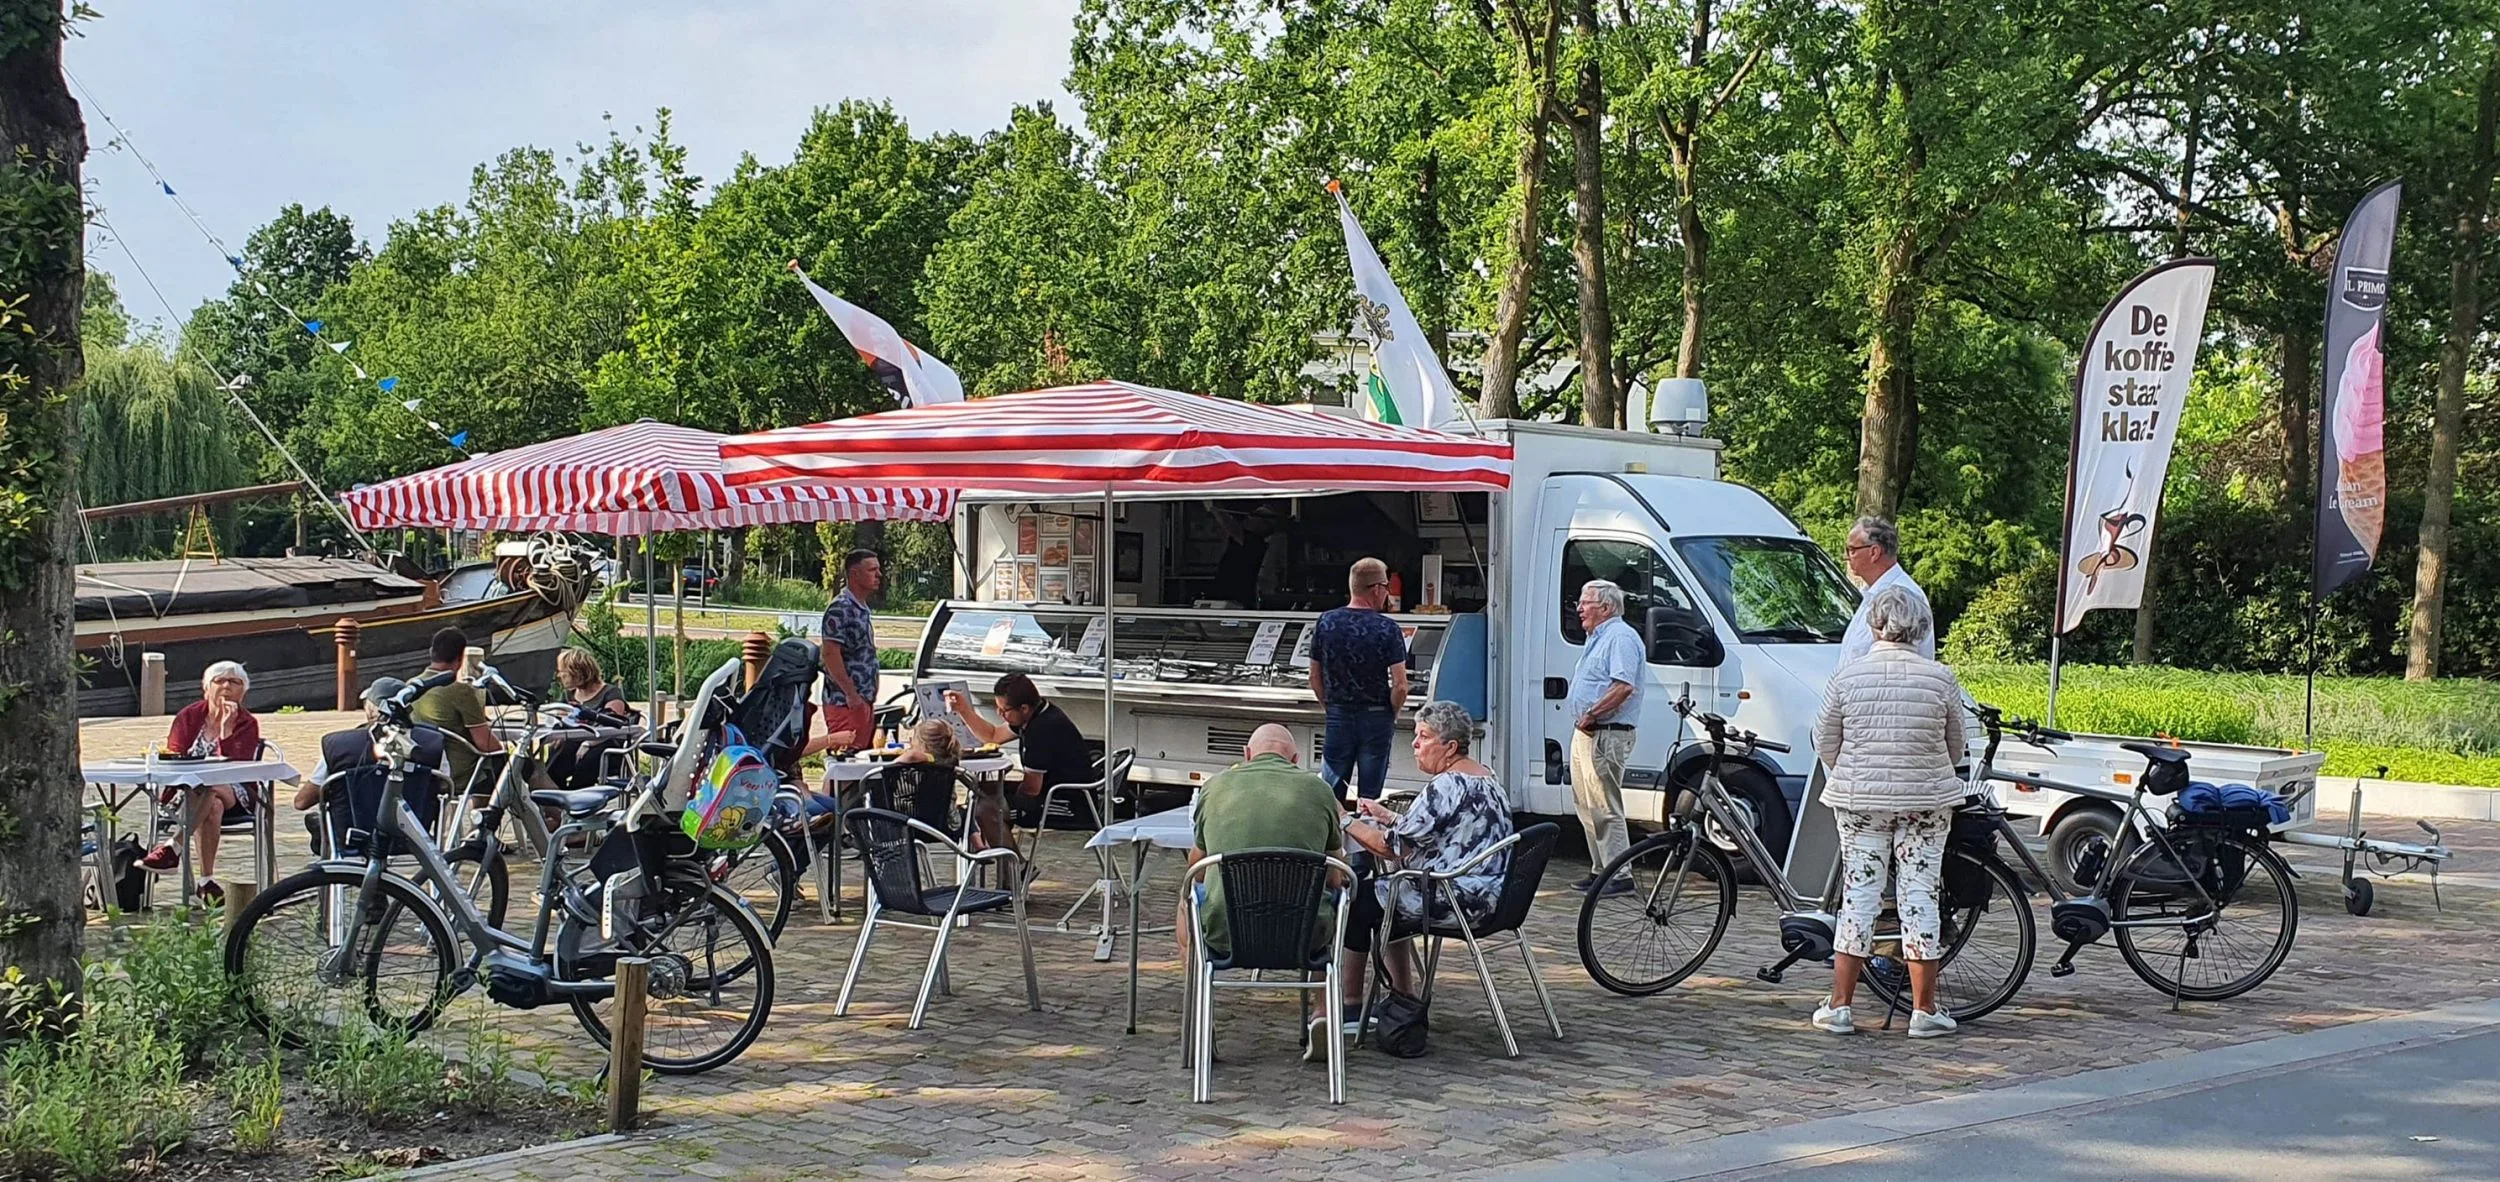 Snack trolley de Juffer Horecagroningen.nl